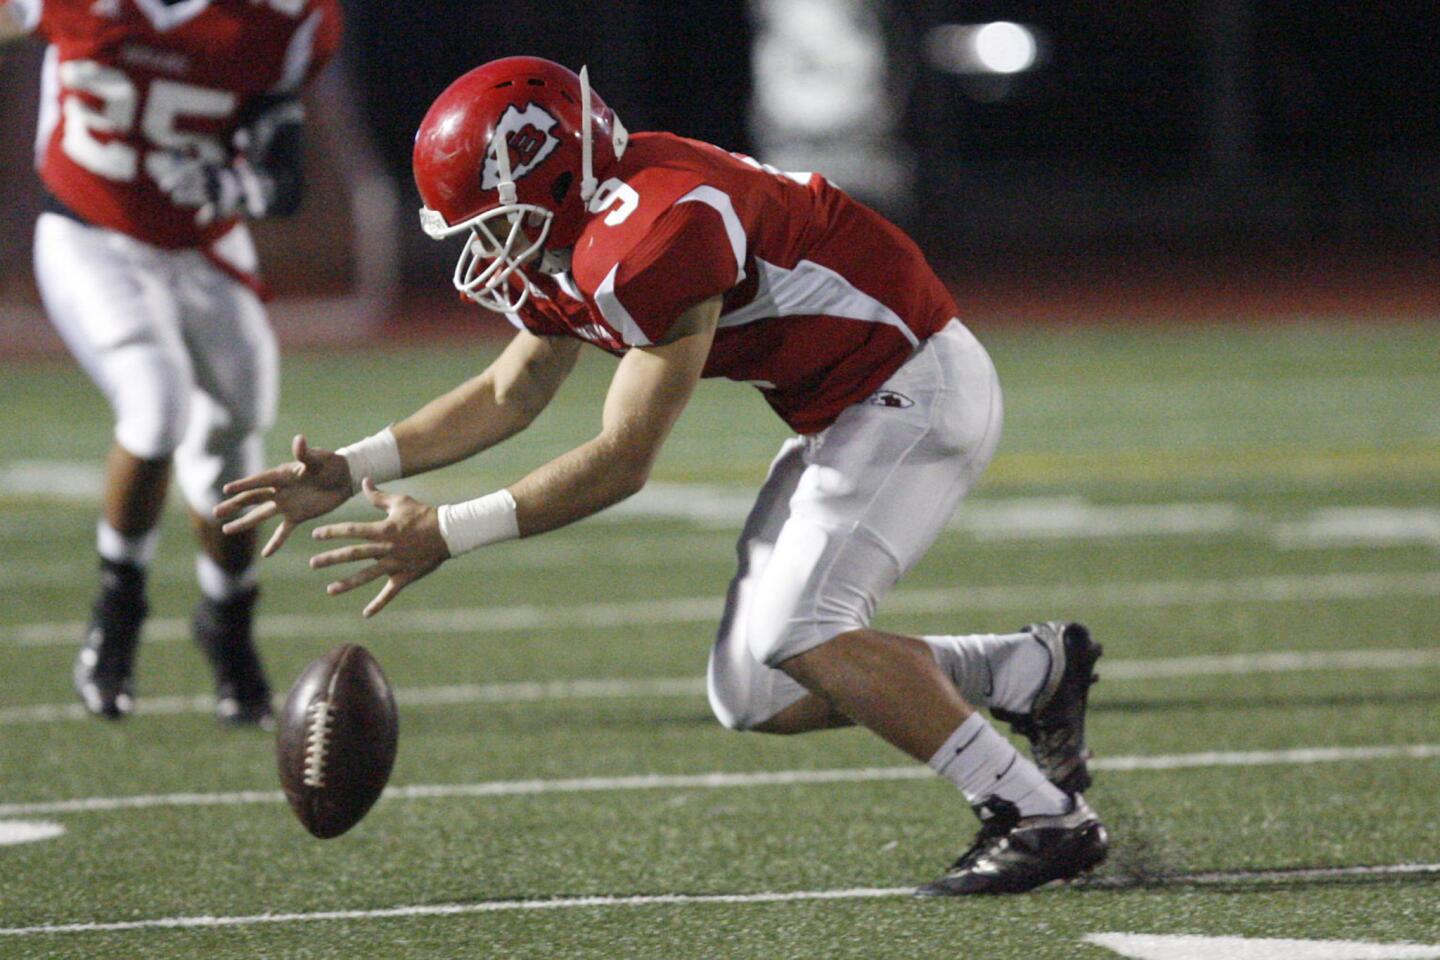 Burroughs' Garrett Manoukian misses the ball at kickoff during a game against Glendale at John Burroughs High School in Burbank on Thursday, September 27, 2012.